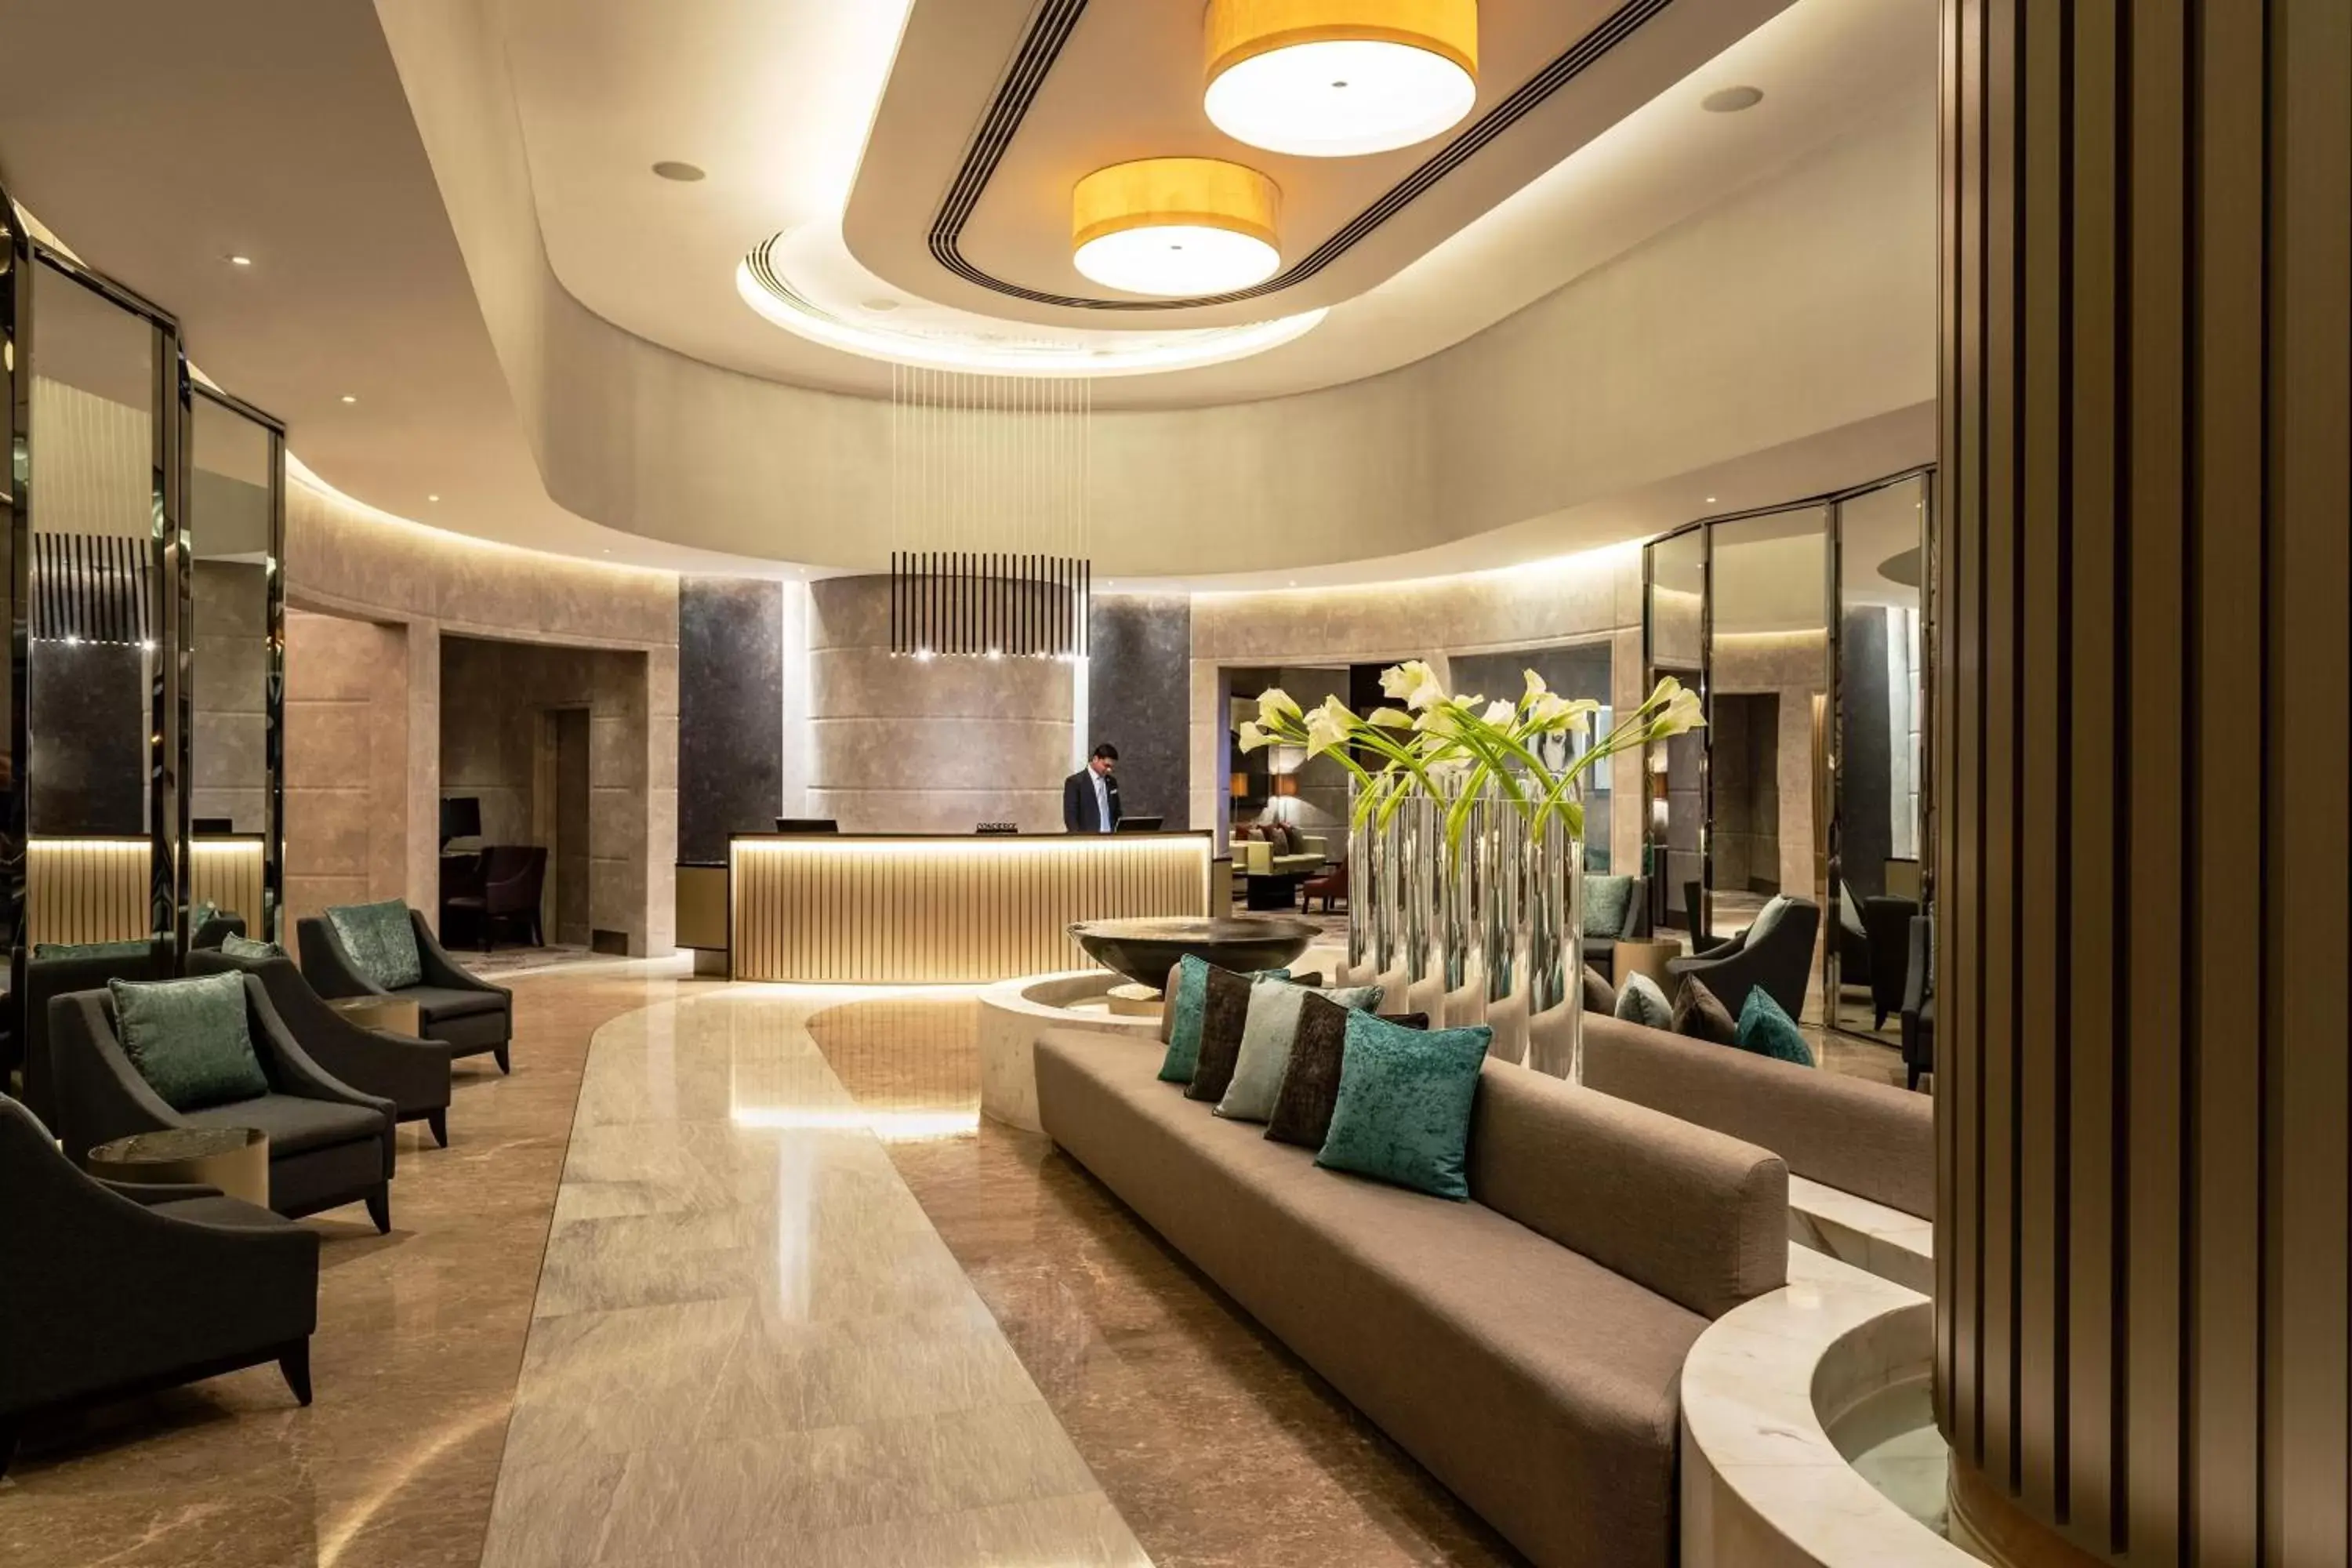 Lobby or reception in Sheraton Mall of the Emirates Hotel, Dubai